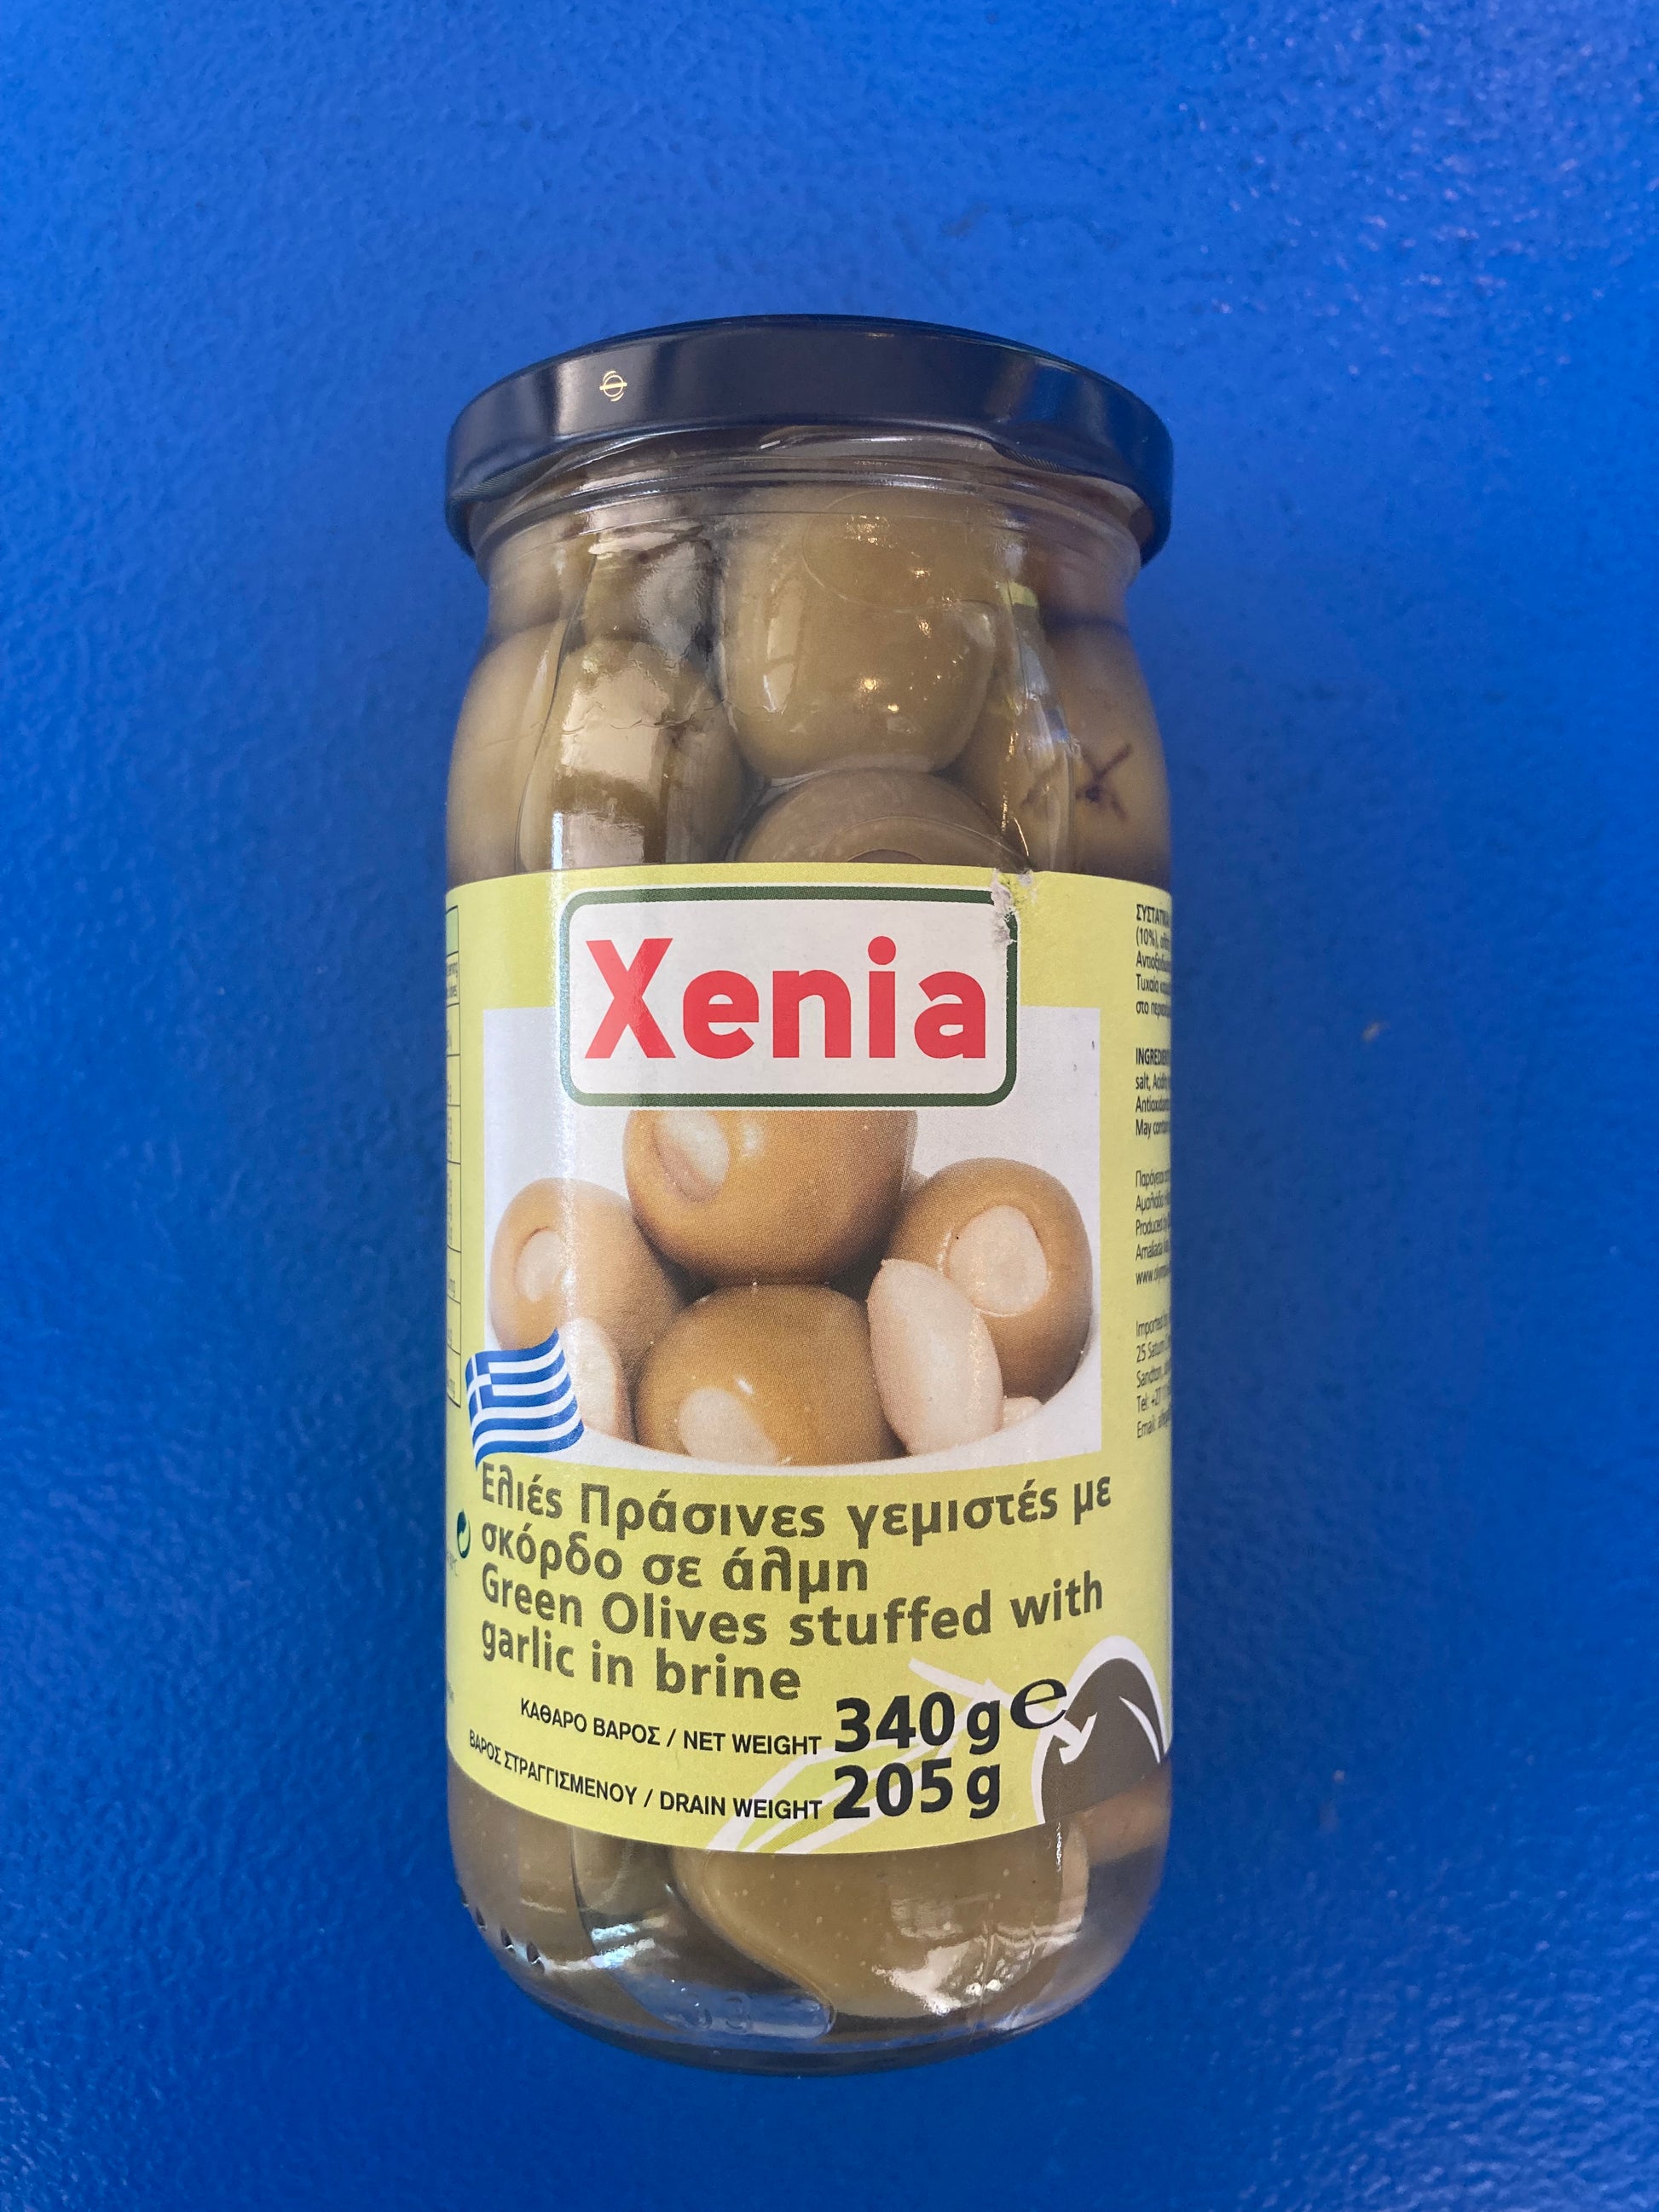 Xenia green olives stuffed with garlic in brine